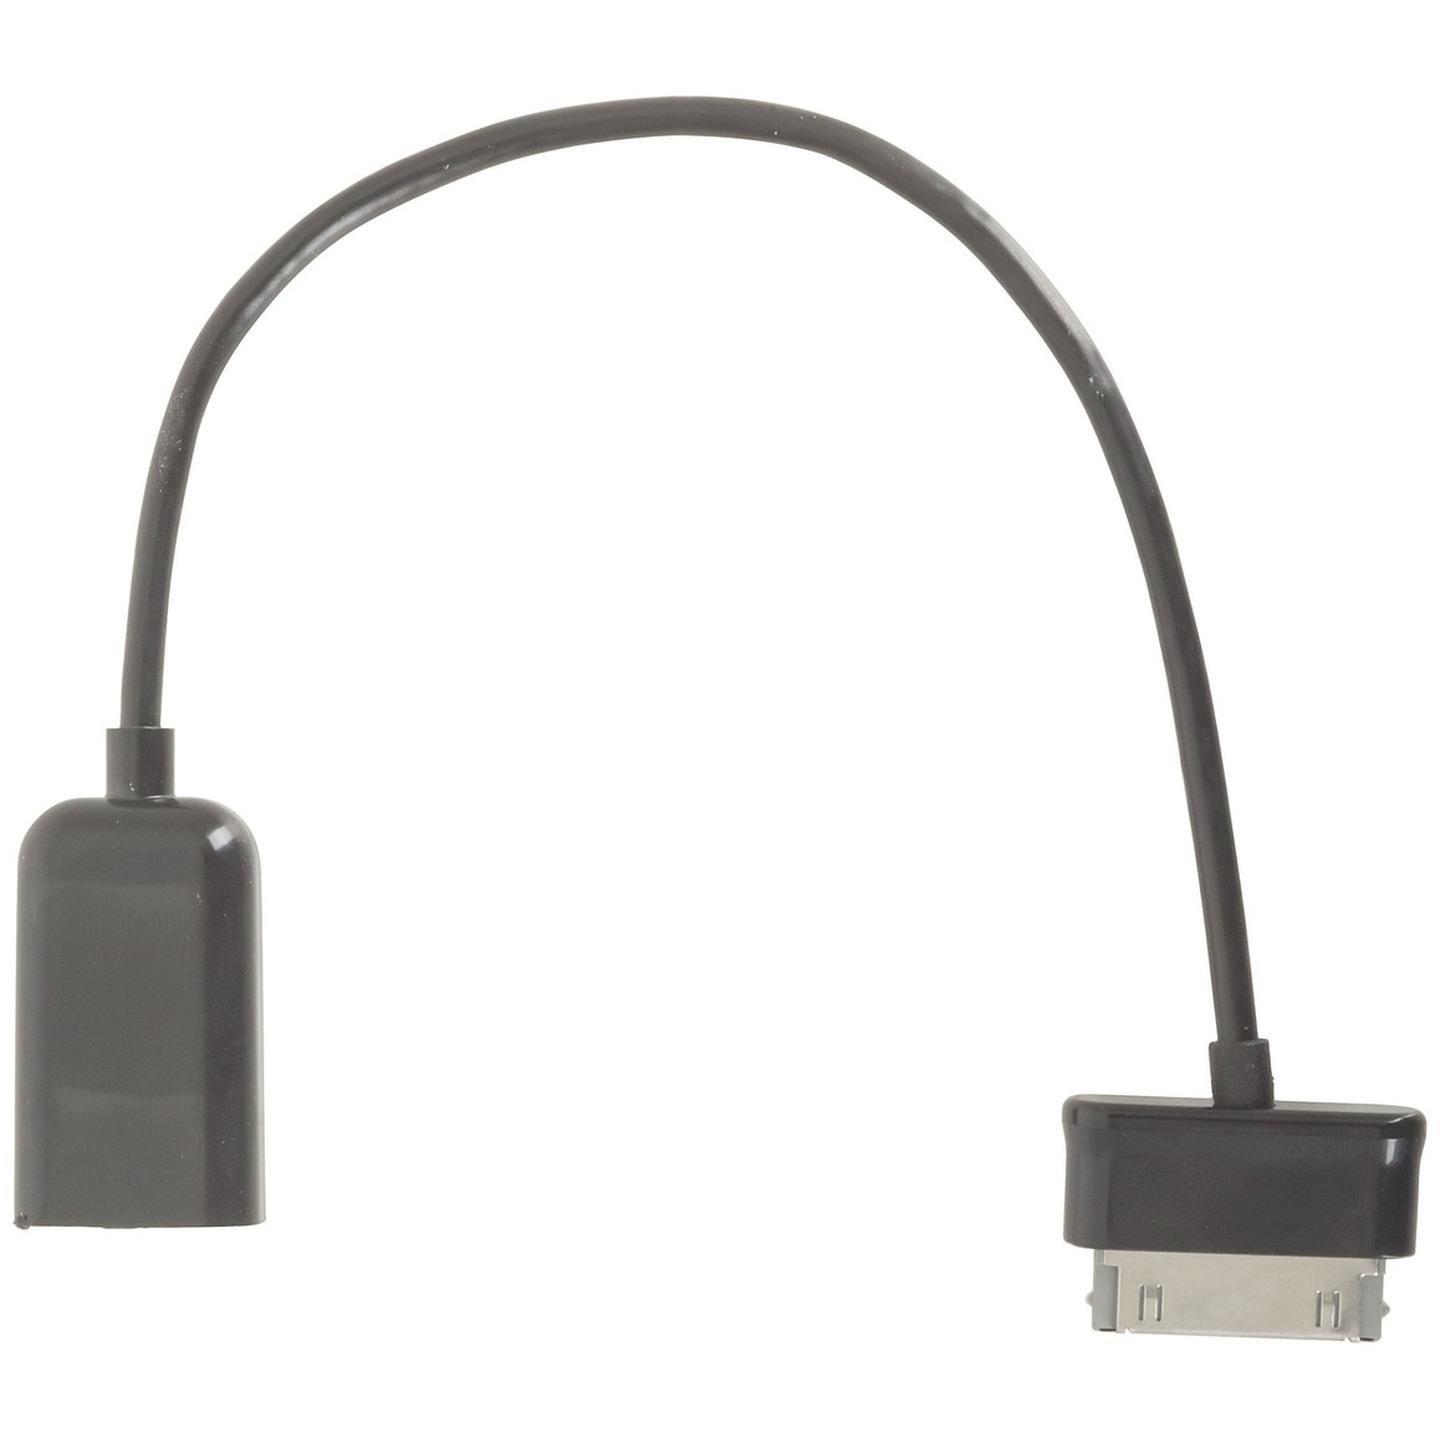 USB A Socket to Samsung OTG Adaptor